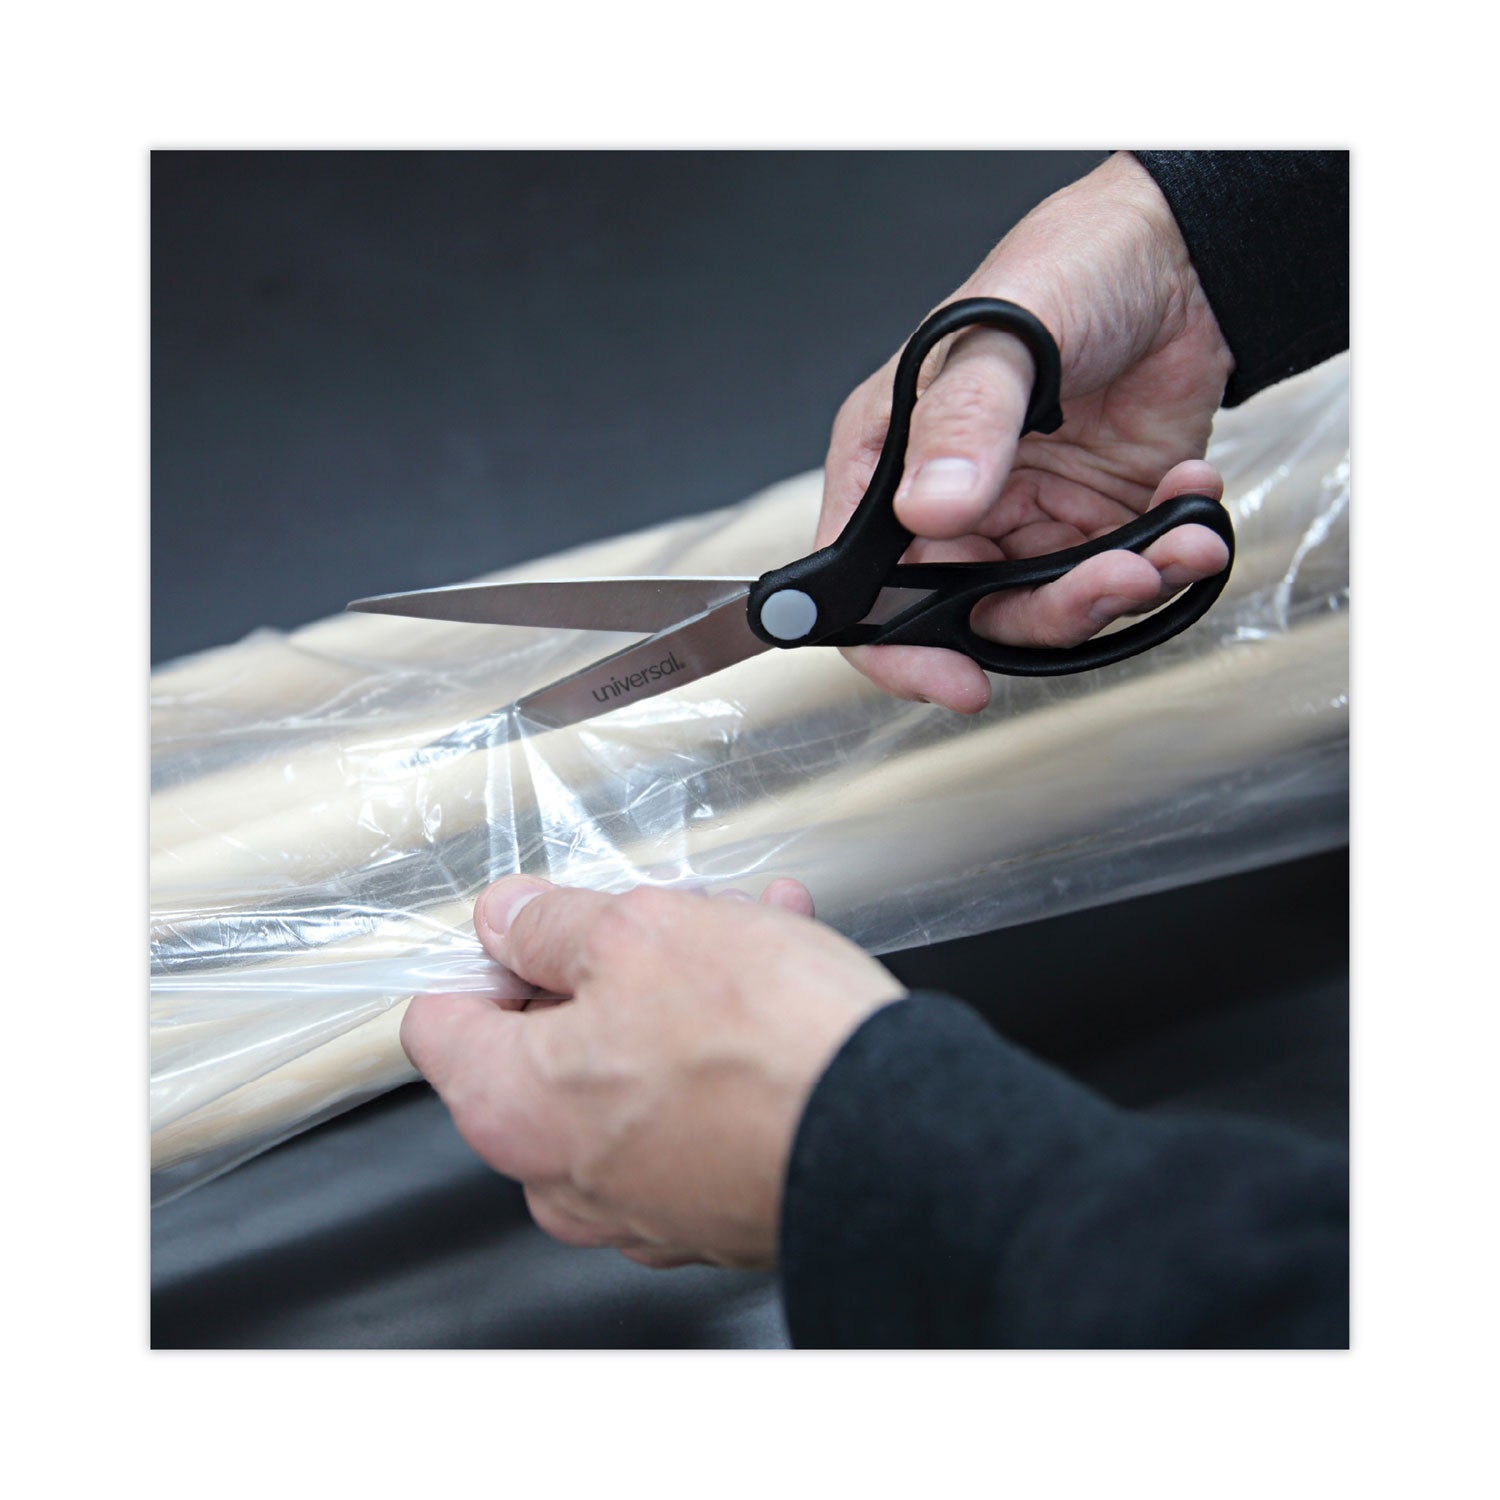 Stainless Steel Office Scissors, 8.5" Long, 3.75" Cut Length, Black Offset Handle - 